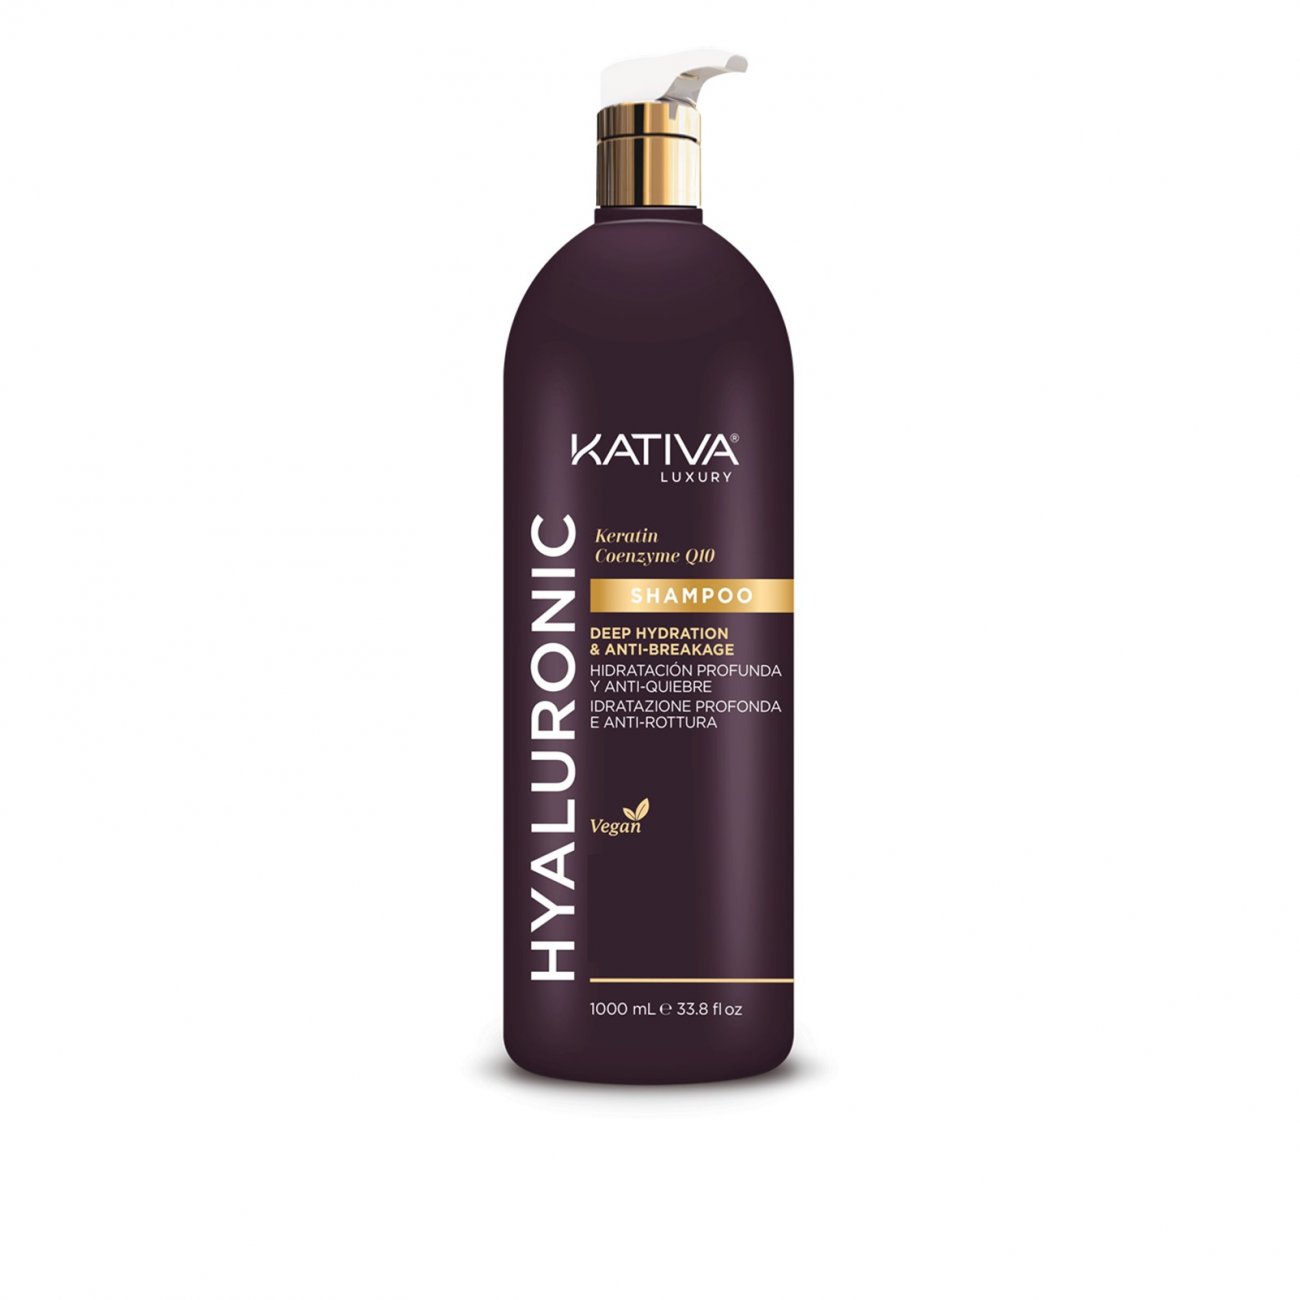 Buy Kativa Luxury Hyaluronic Deep Hydration & Anti-Breakage Shampoo 1L (33.8 fl oz) ·